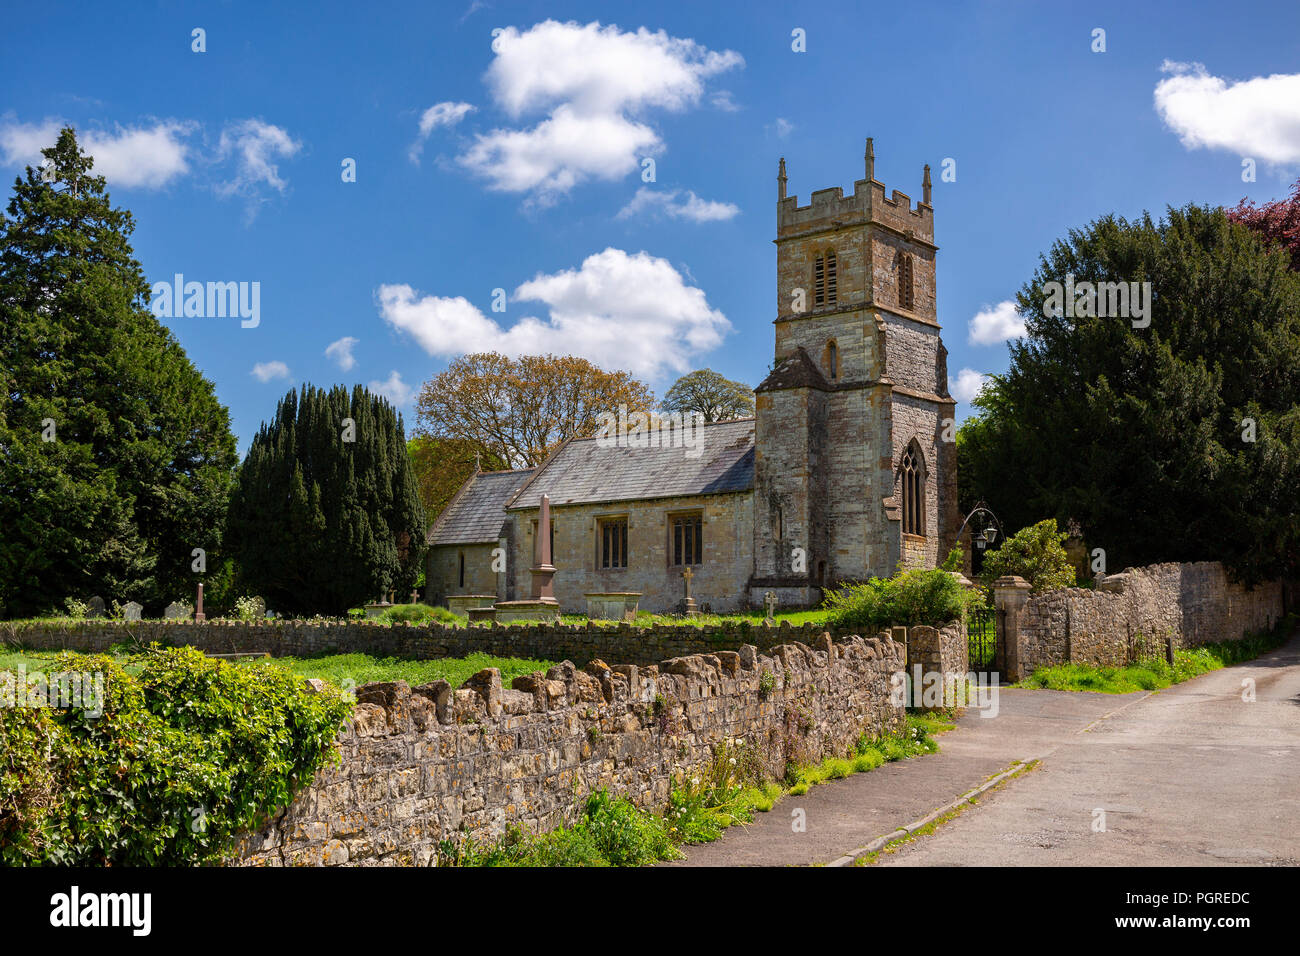 Village Church at Dunkerton, Somerset, England. Stock Photo